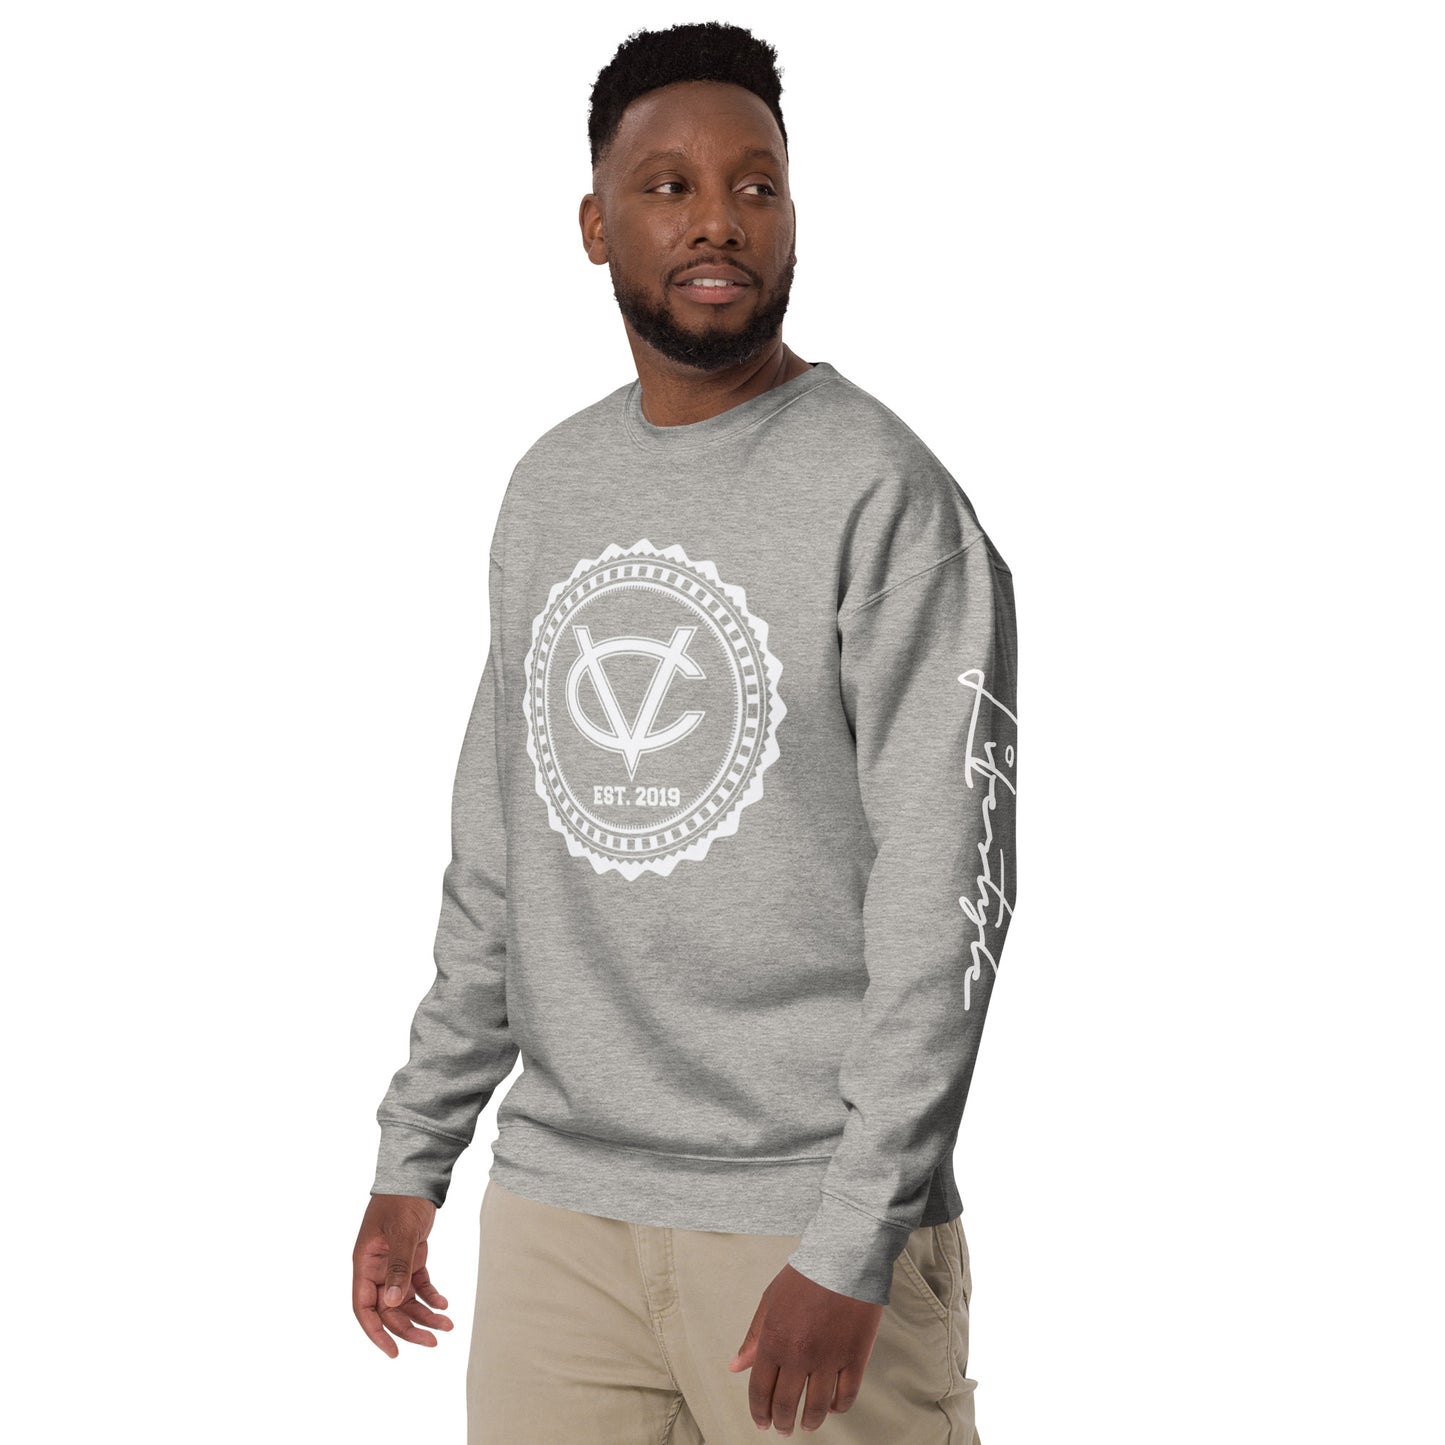 CvLs BL Unisex Premium Sweatshirt